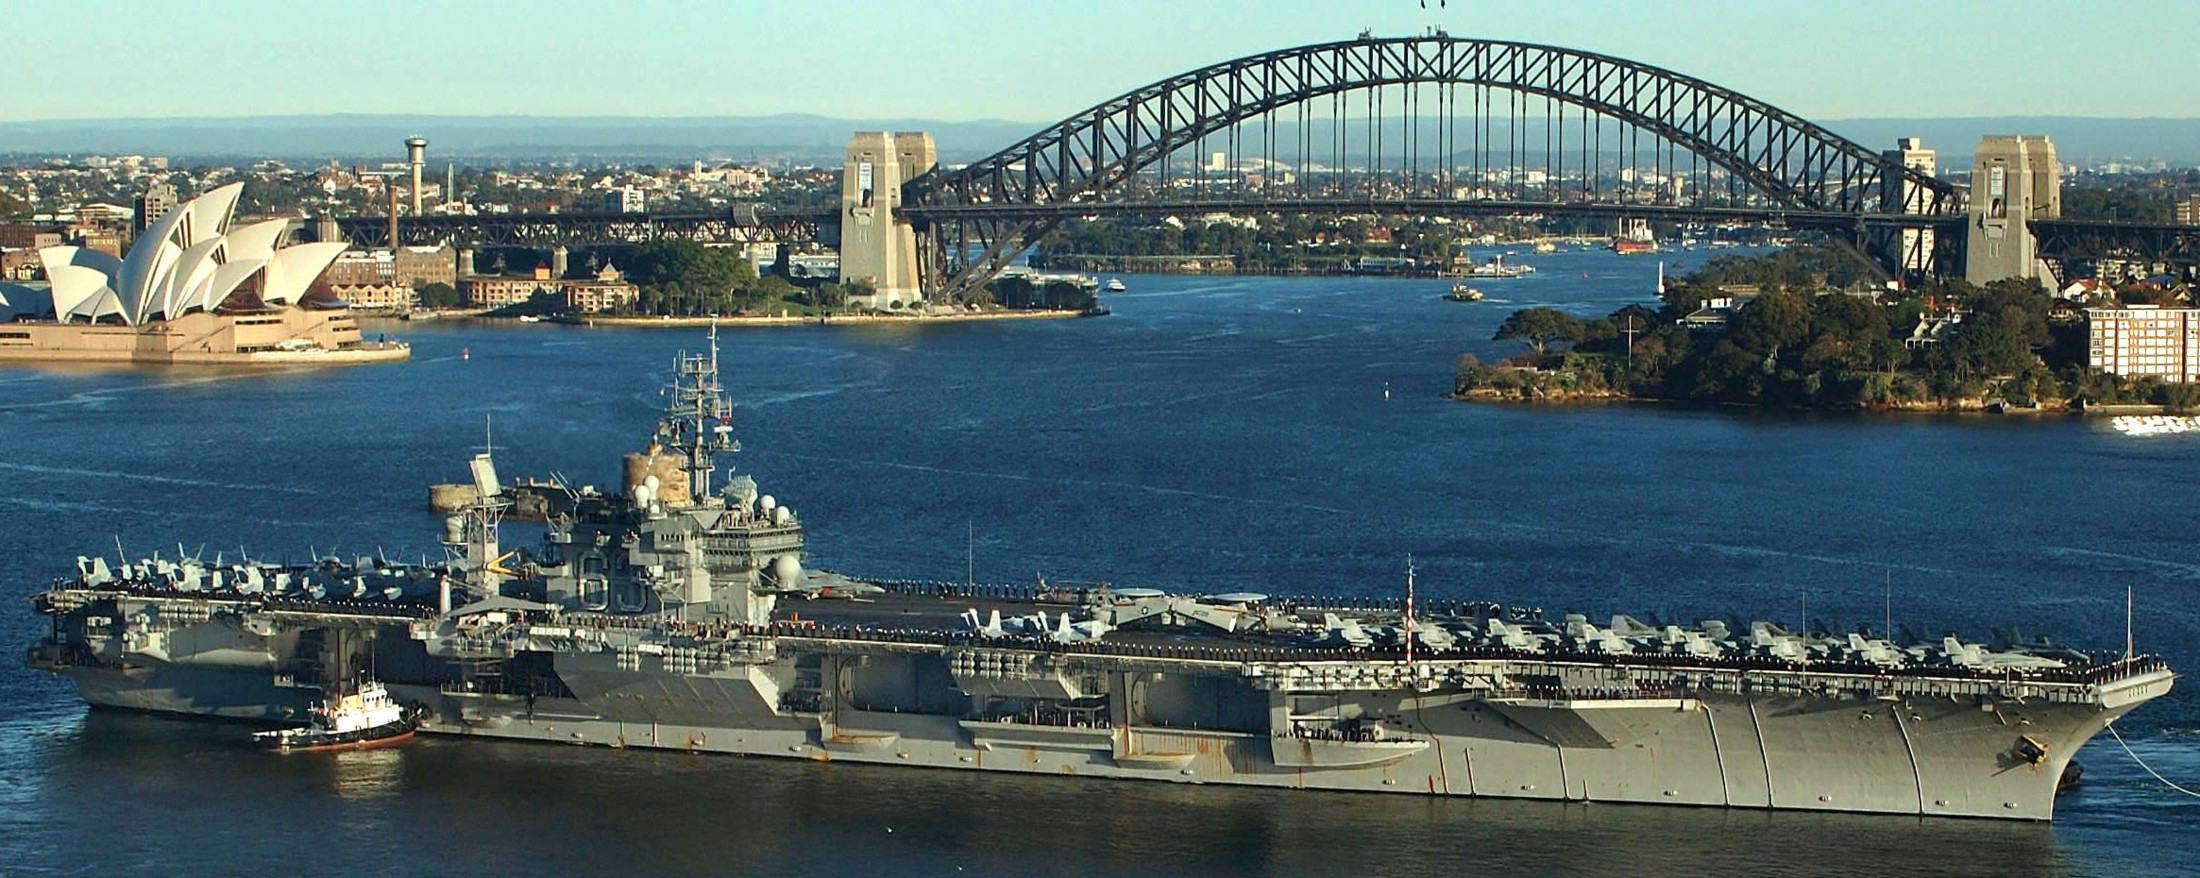 cv-63 uss kitty hawk aircraft carrier air wing cvw-5 us navy 156 sydney australia